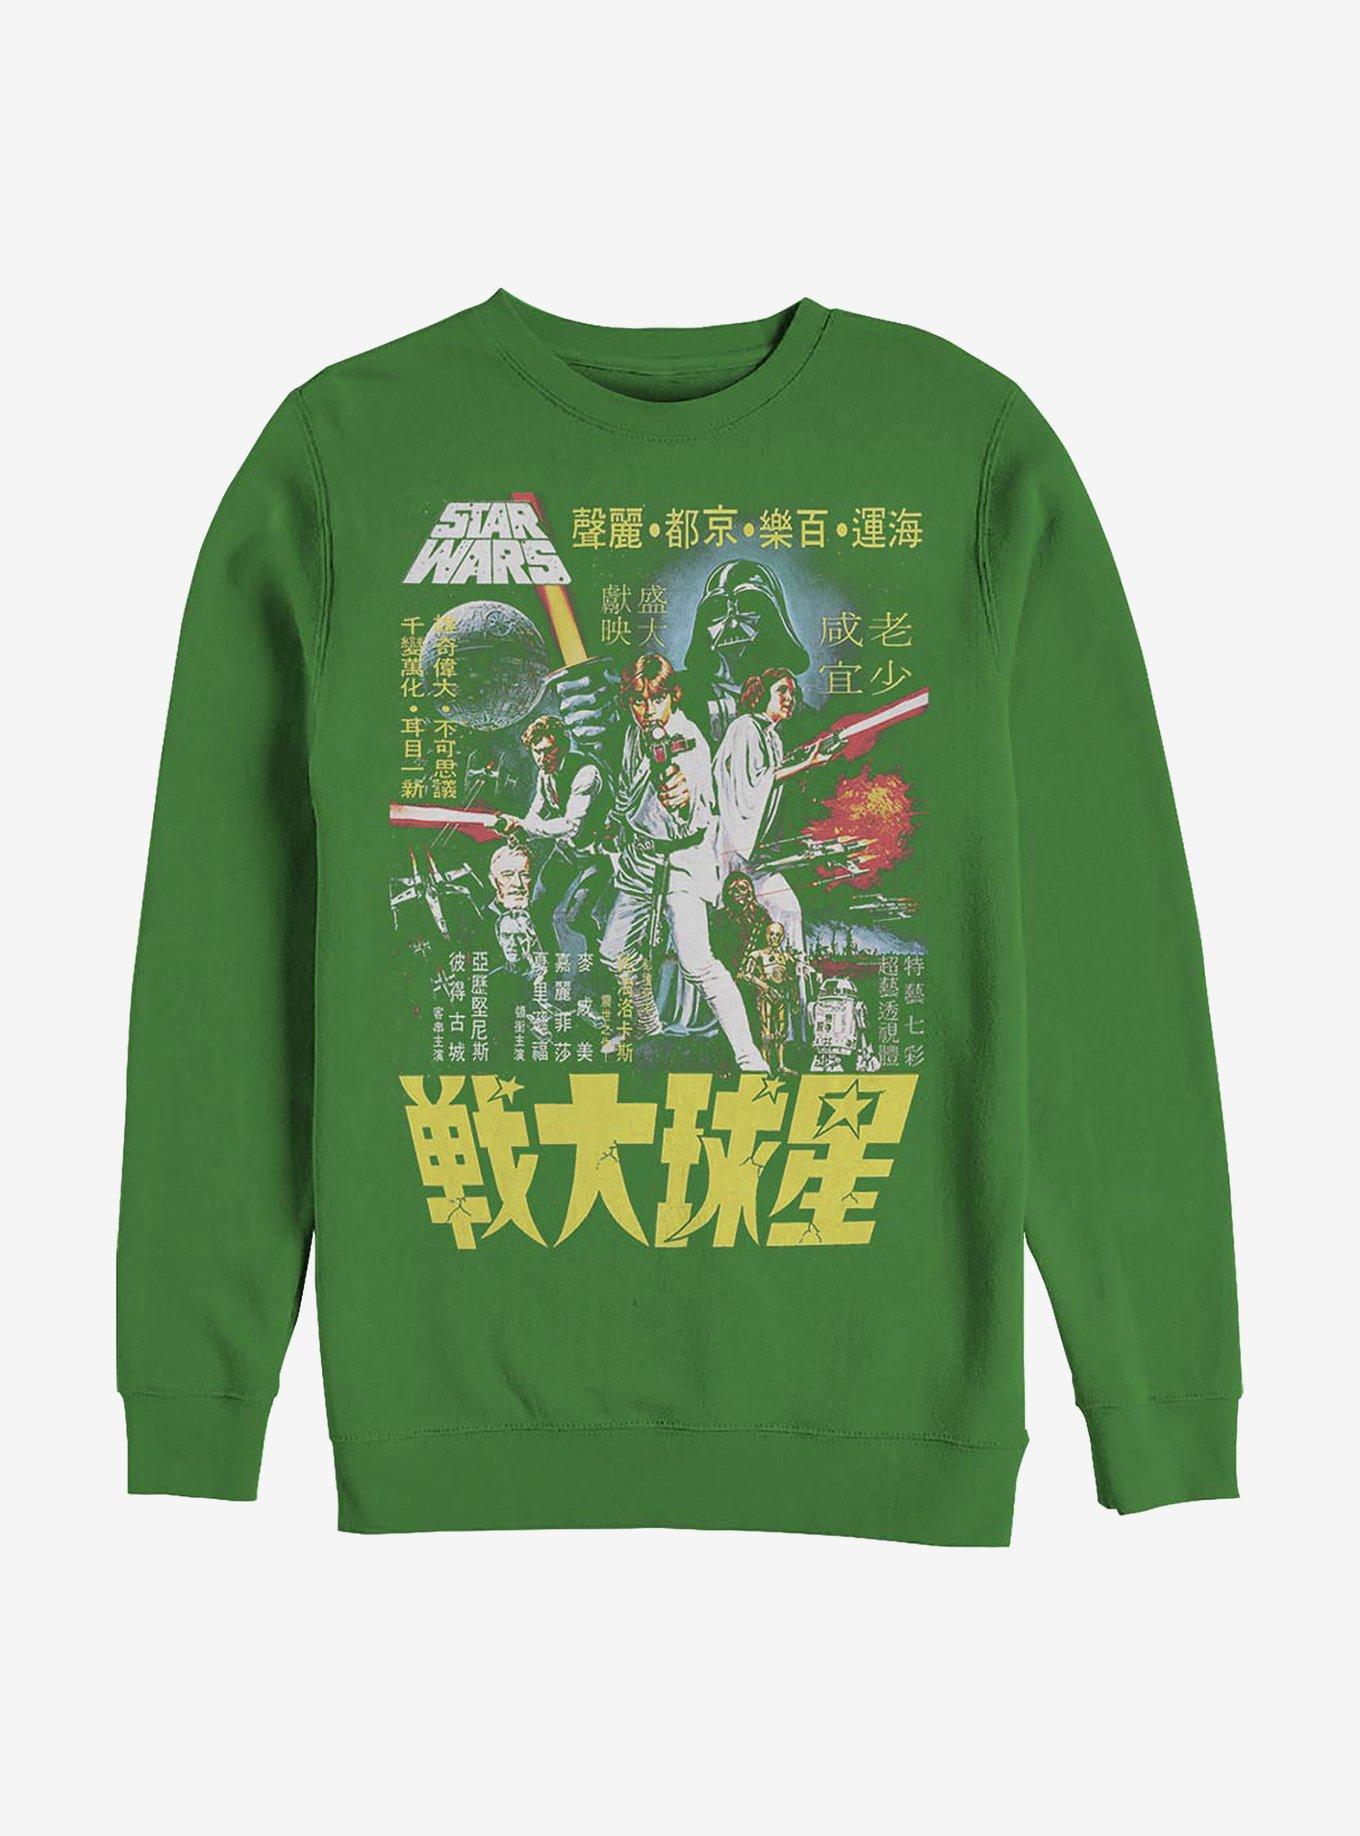 Star Wars Japanese Poster Wars Crew Sweatshirt, KELLY, hi-res